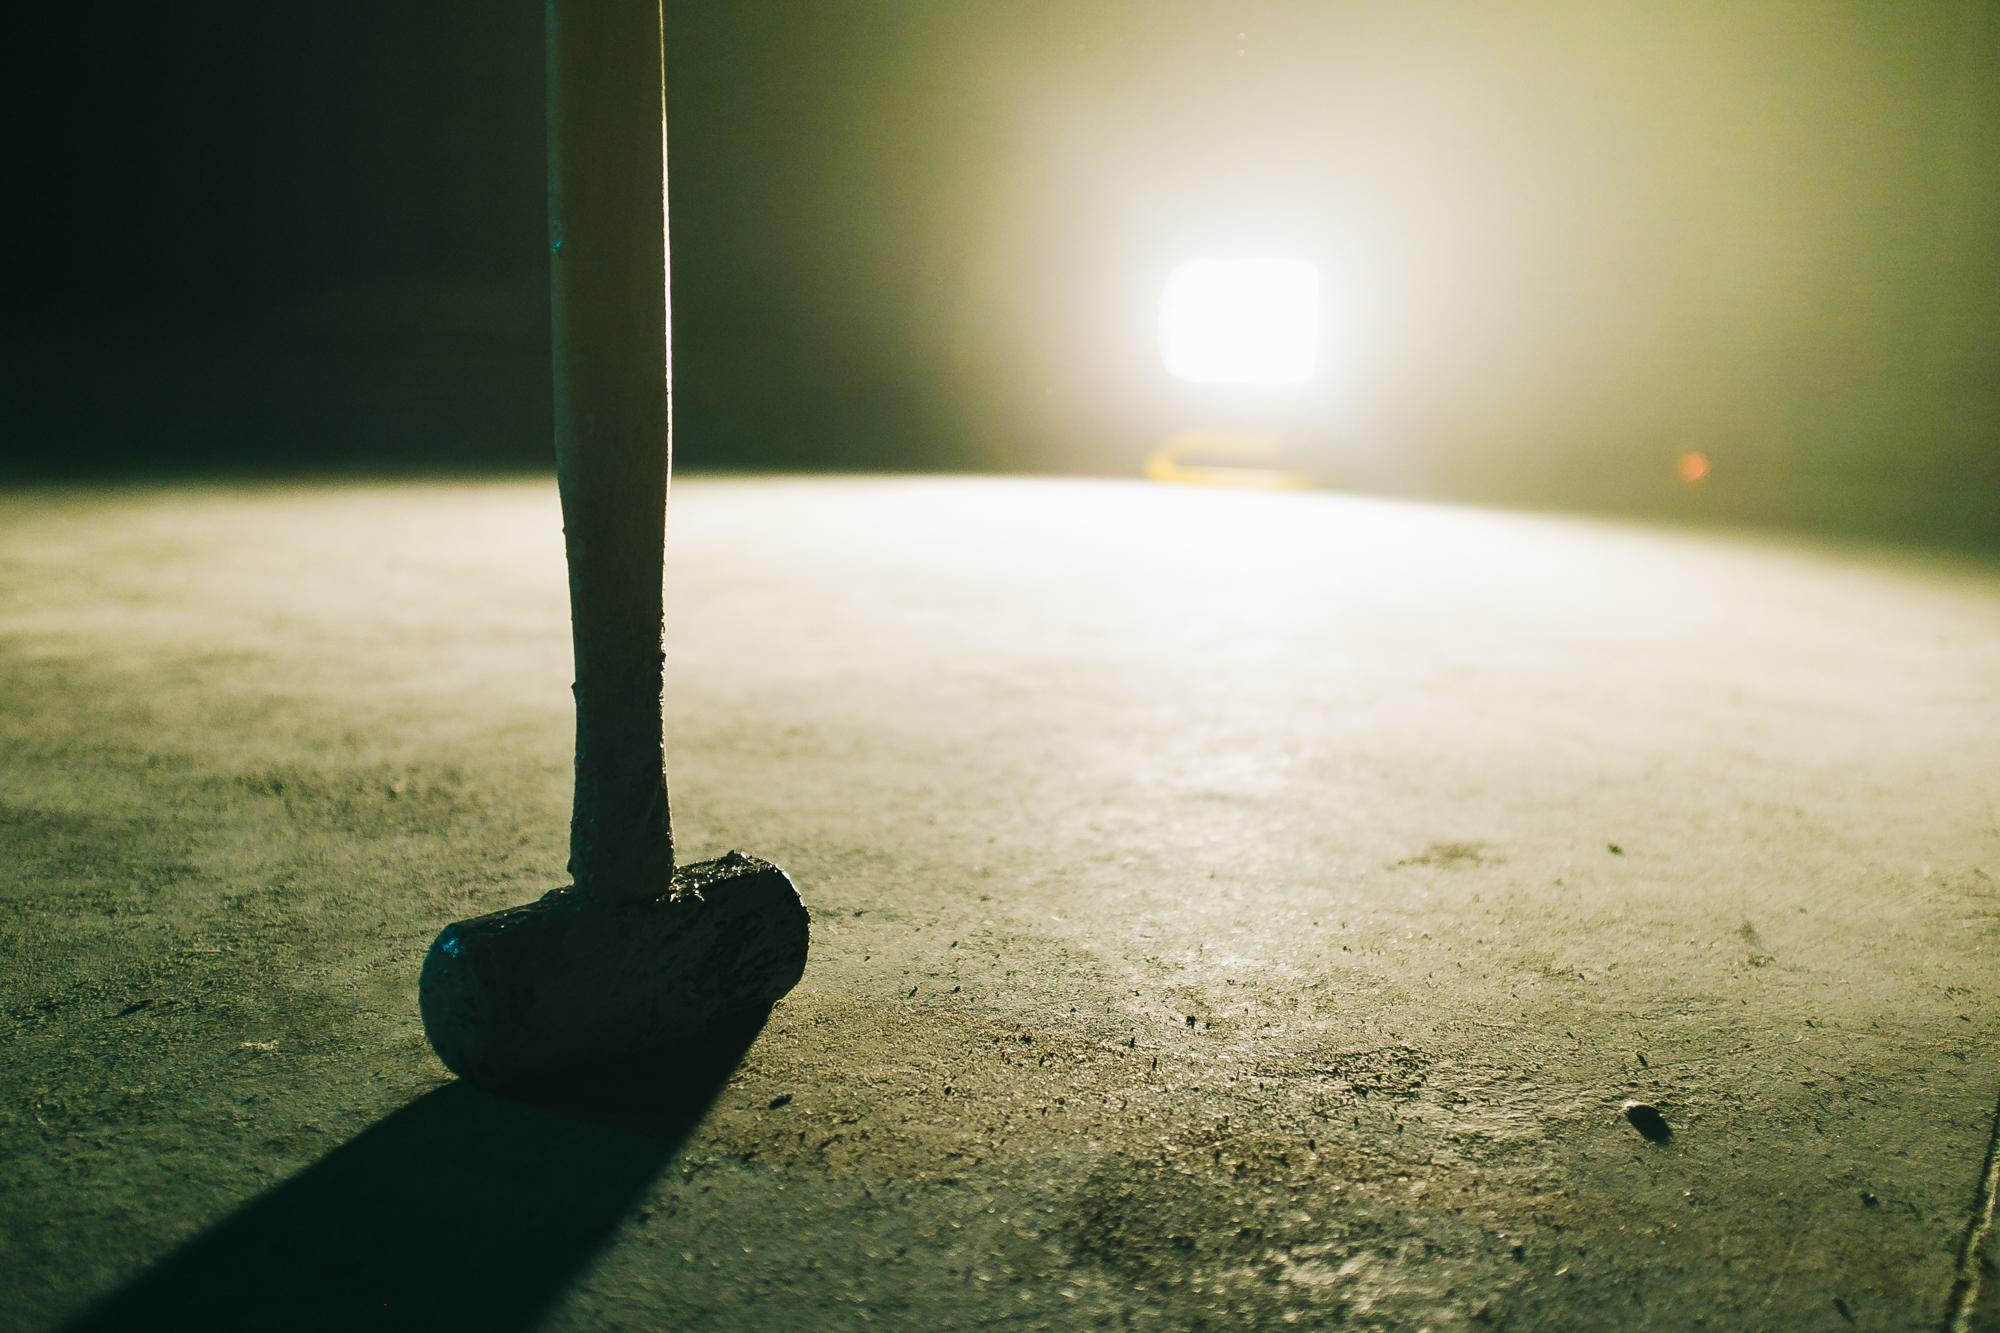 Single sledge hammer on ground yellow light shining into camera.